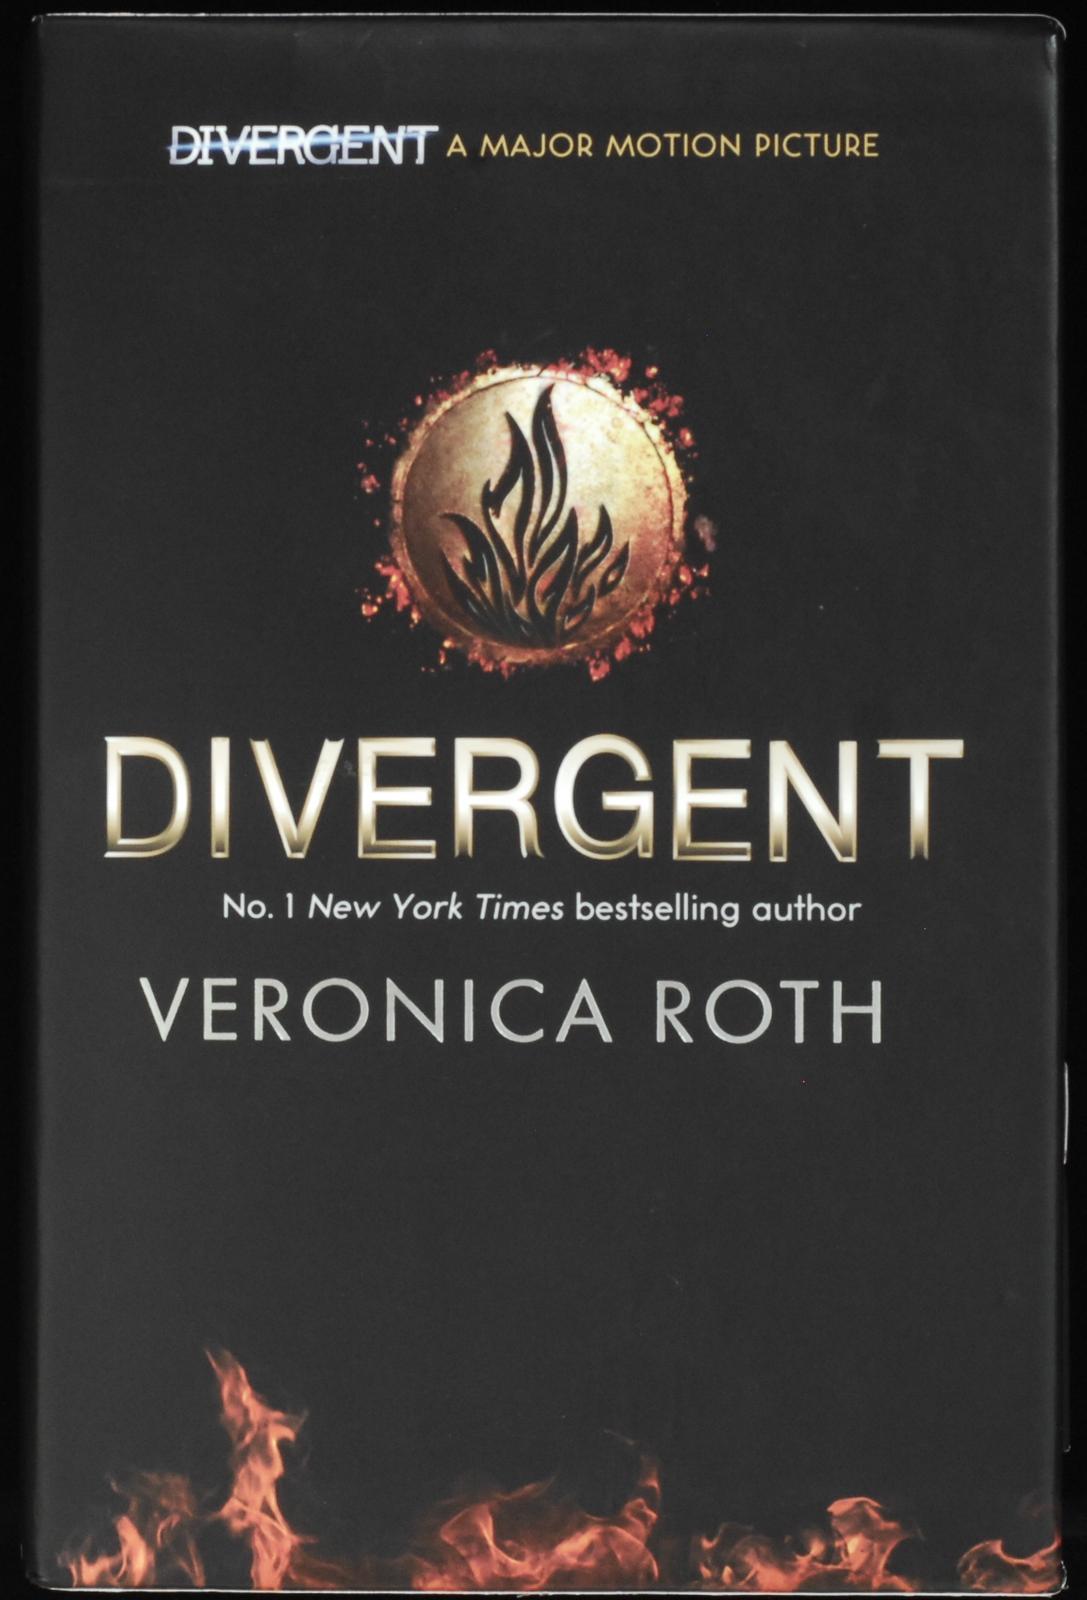 mbb006205c_-_Roth_Veronica_-_The_Divergent_Series.jpg